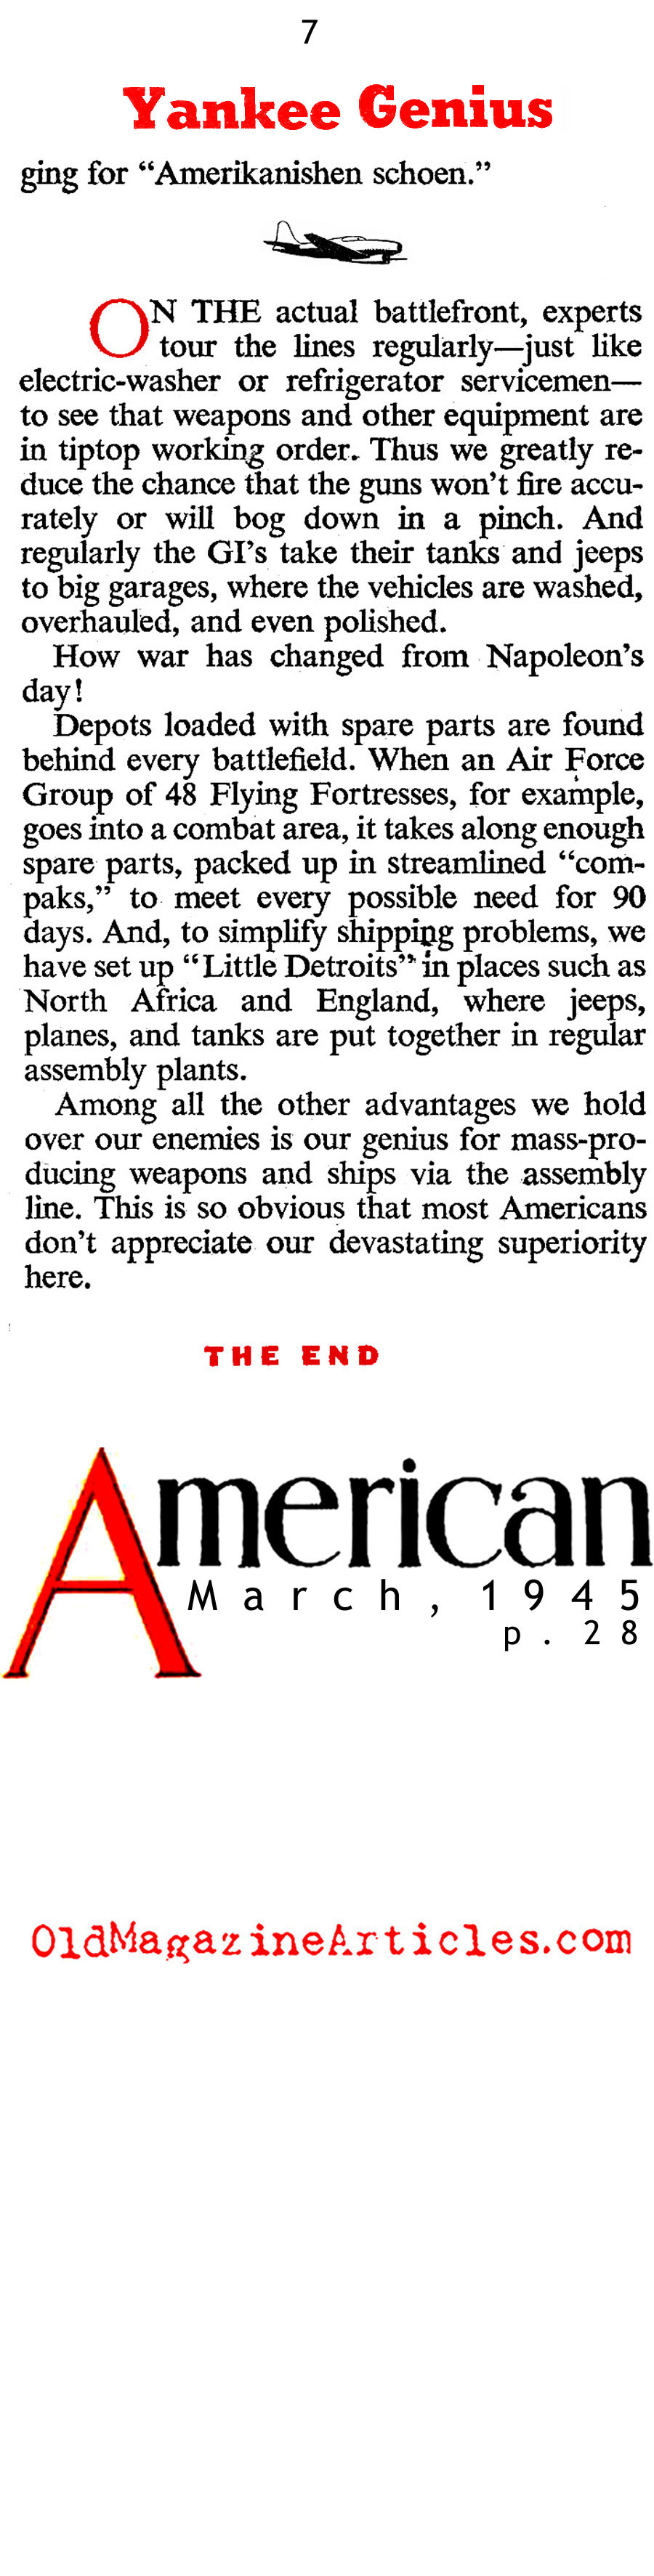 The American Way of War (American Magazine, 1945)